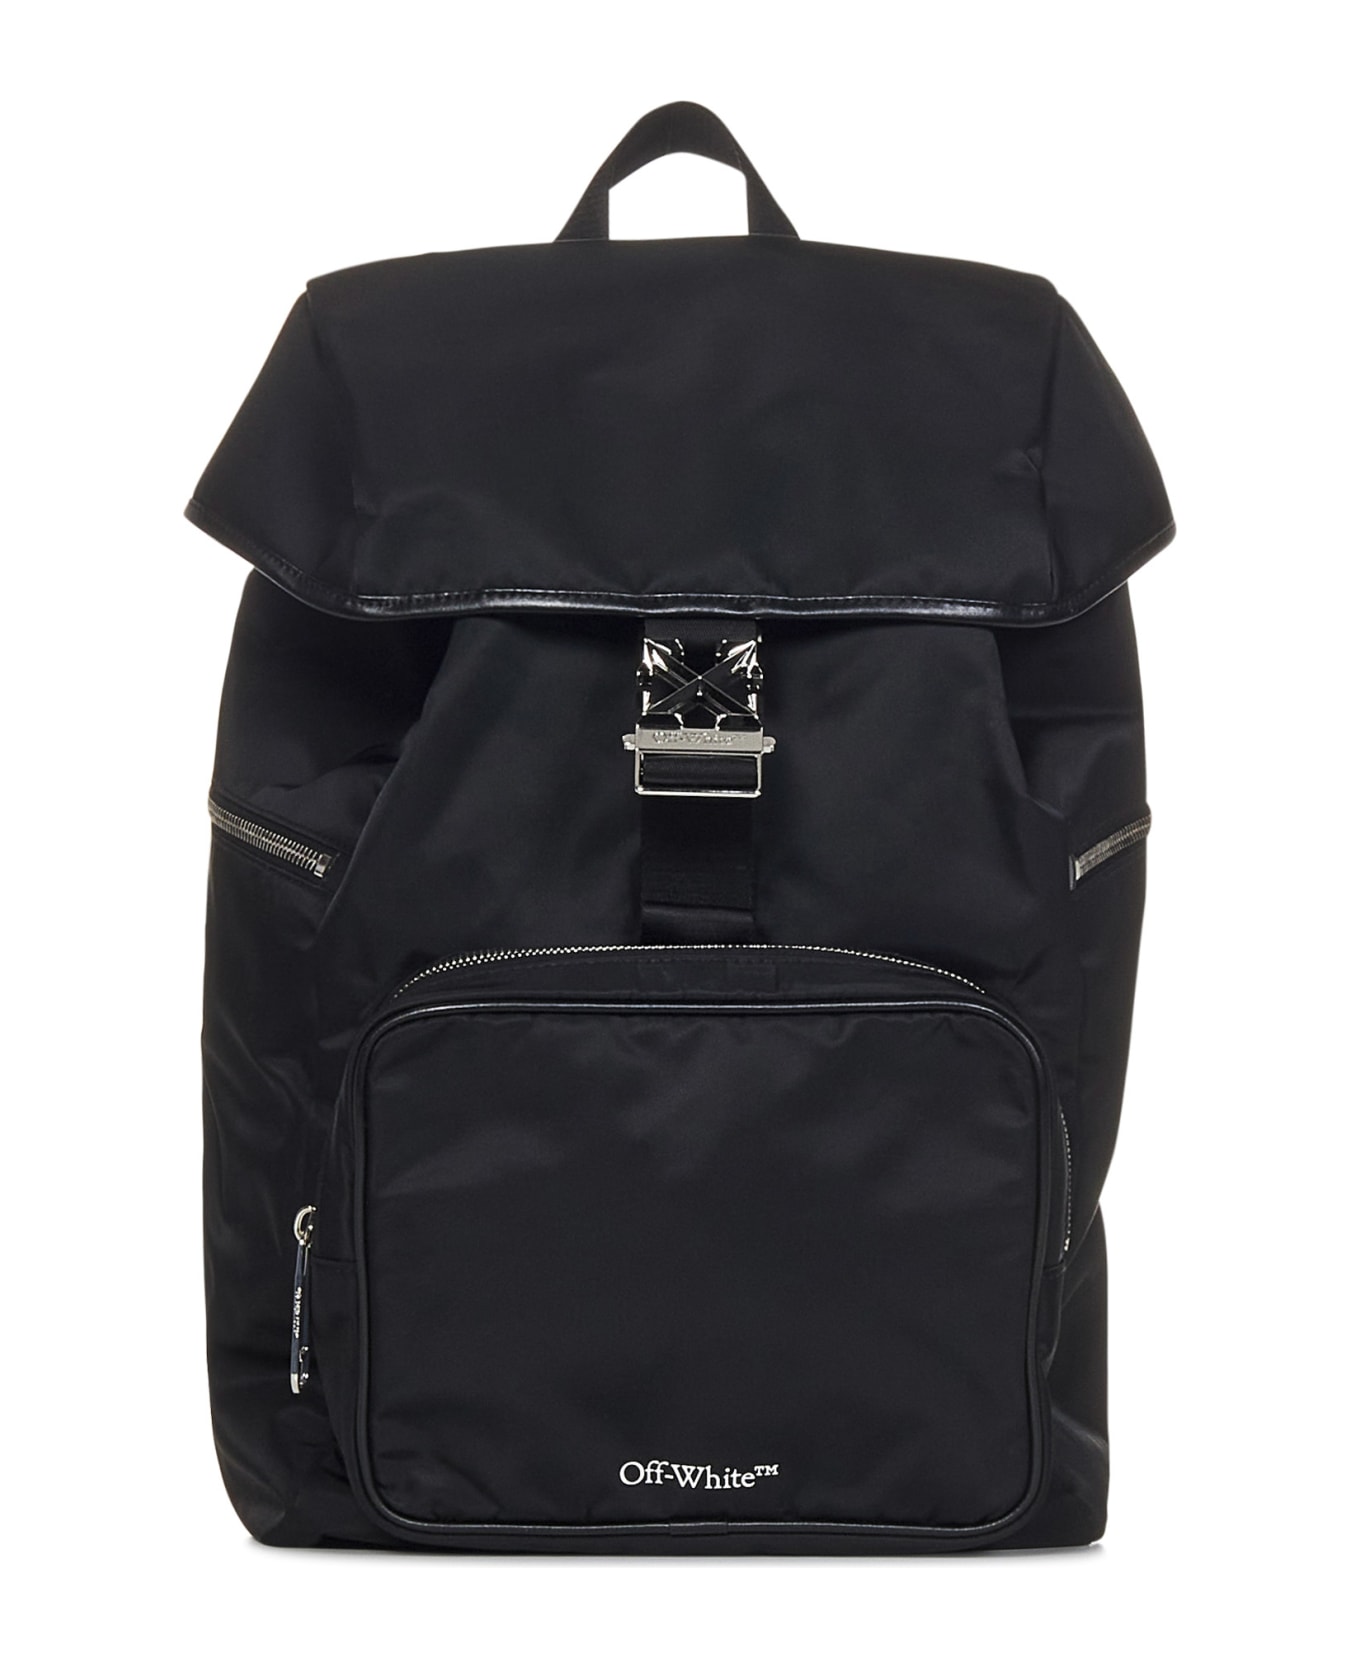 Off-White Arrow Backpack - Black